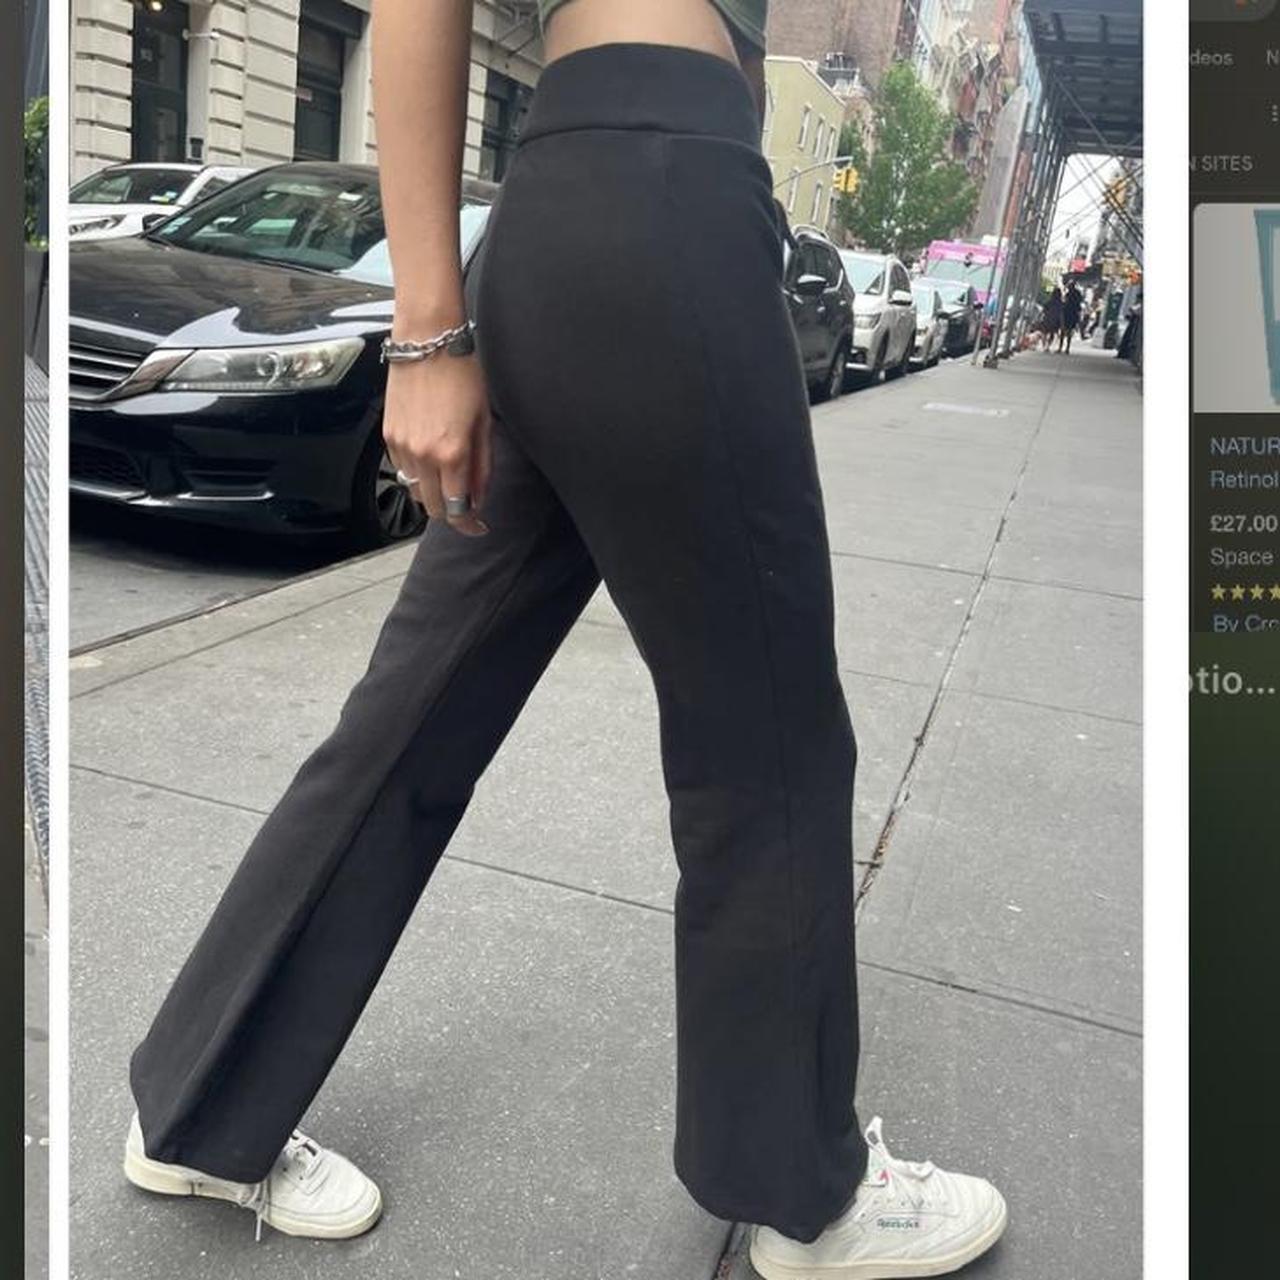 Brandy Melville Hilary Yoga pants never worn best - Depop